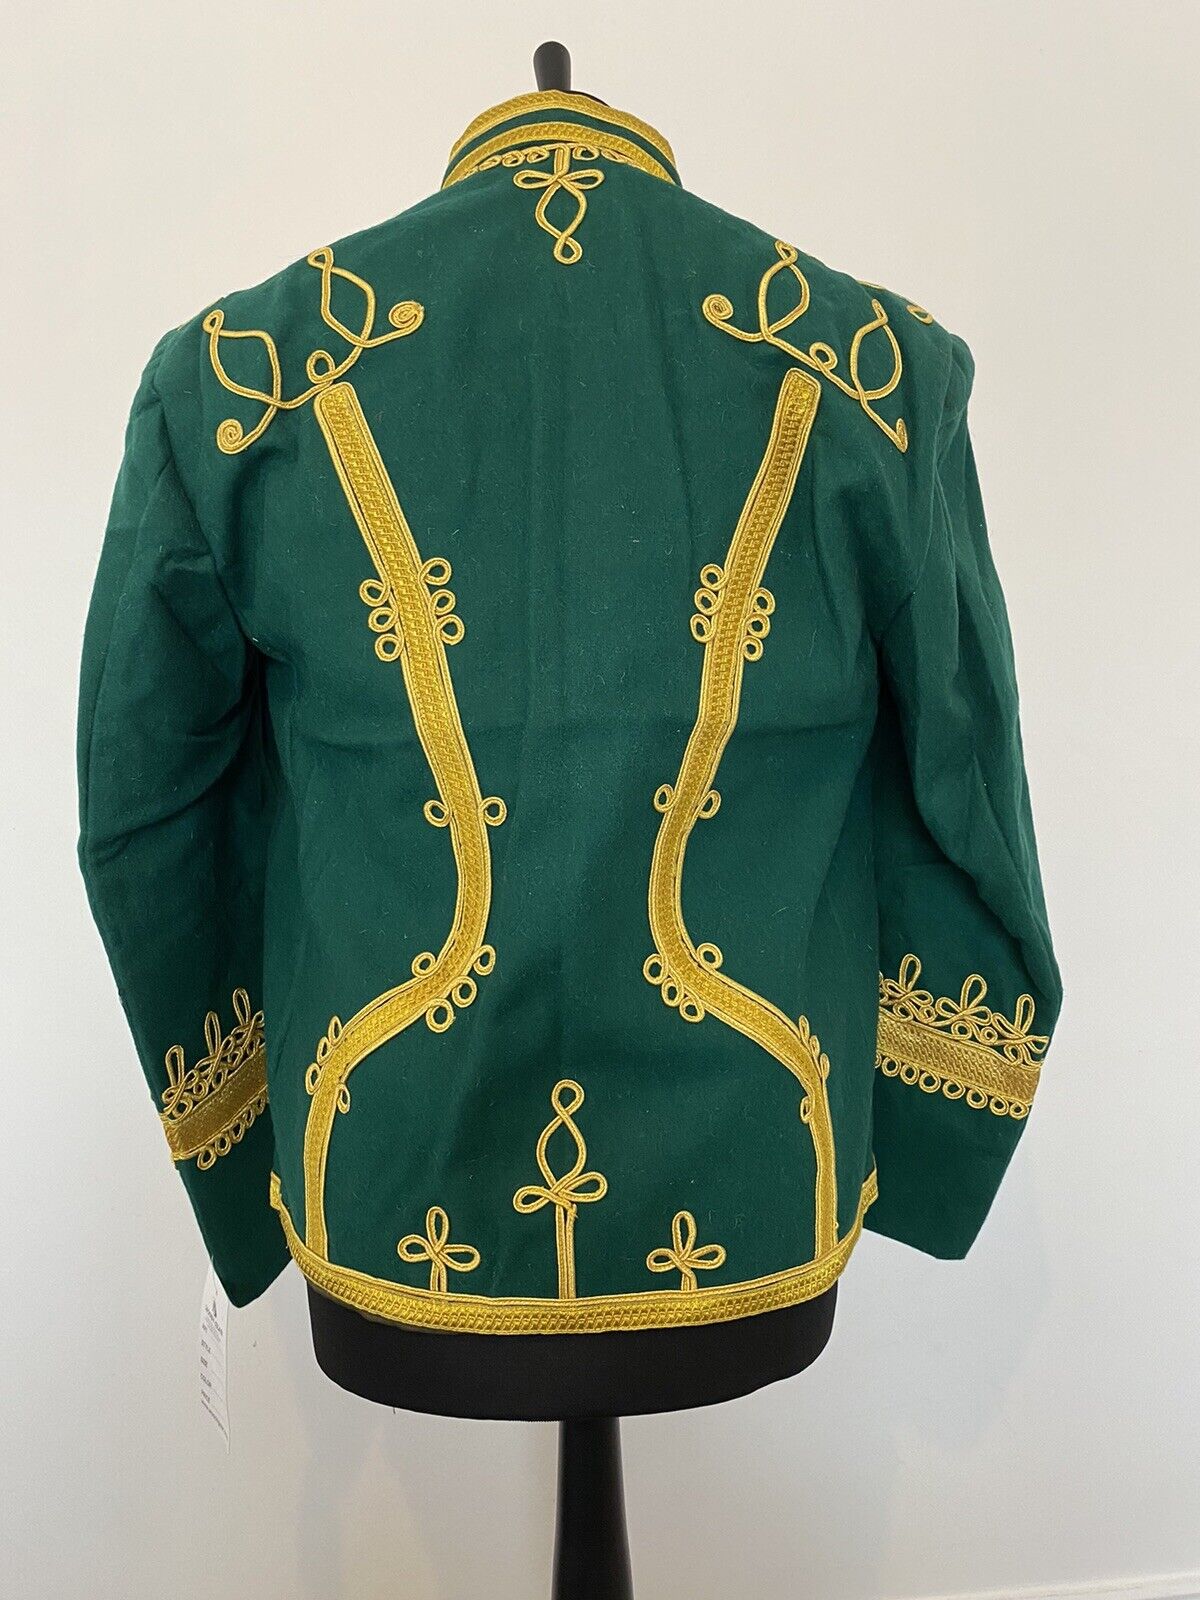 Napoleonic Military Style Tunic pelisse Jimmie Hendrix Uniform Hussar Jacket